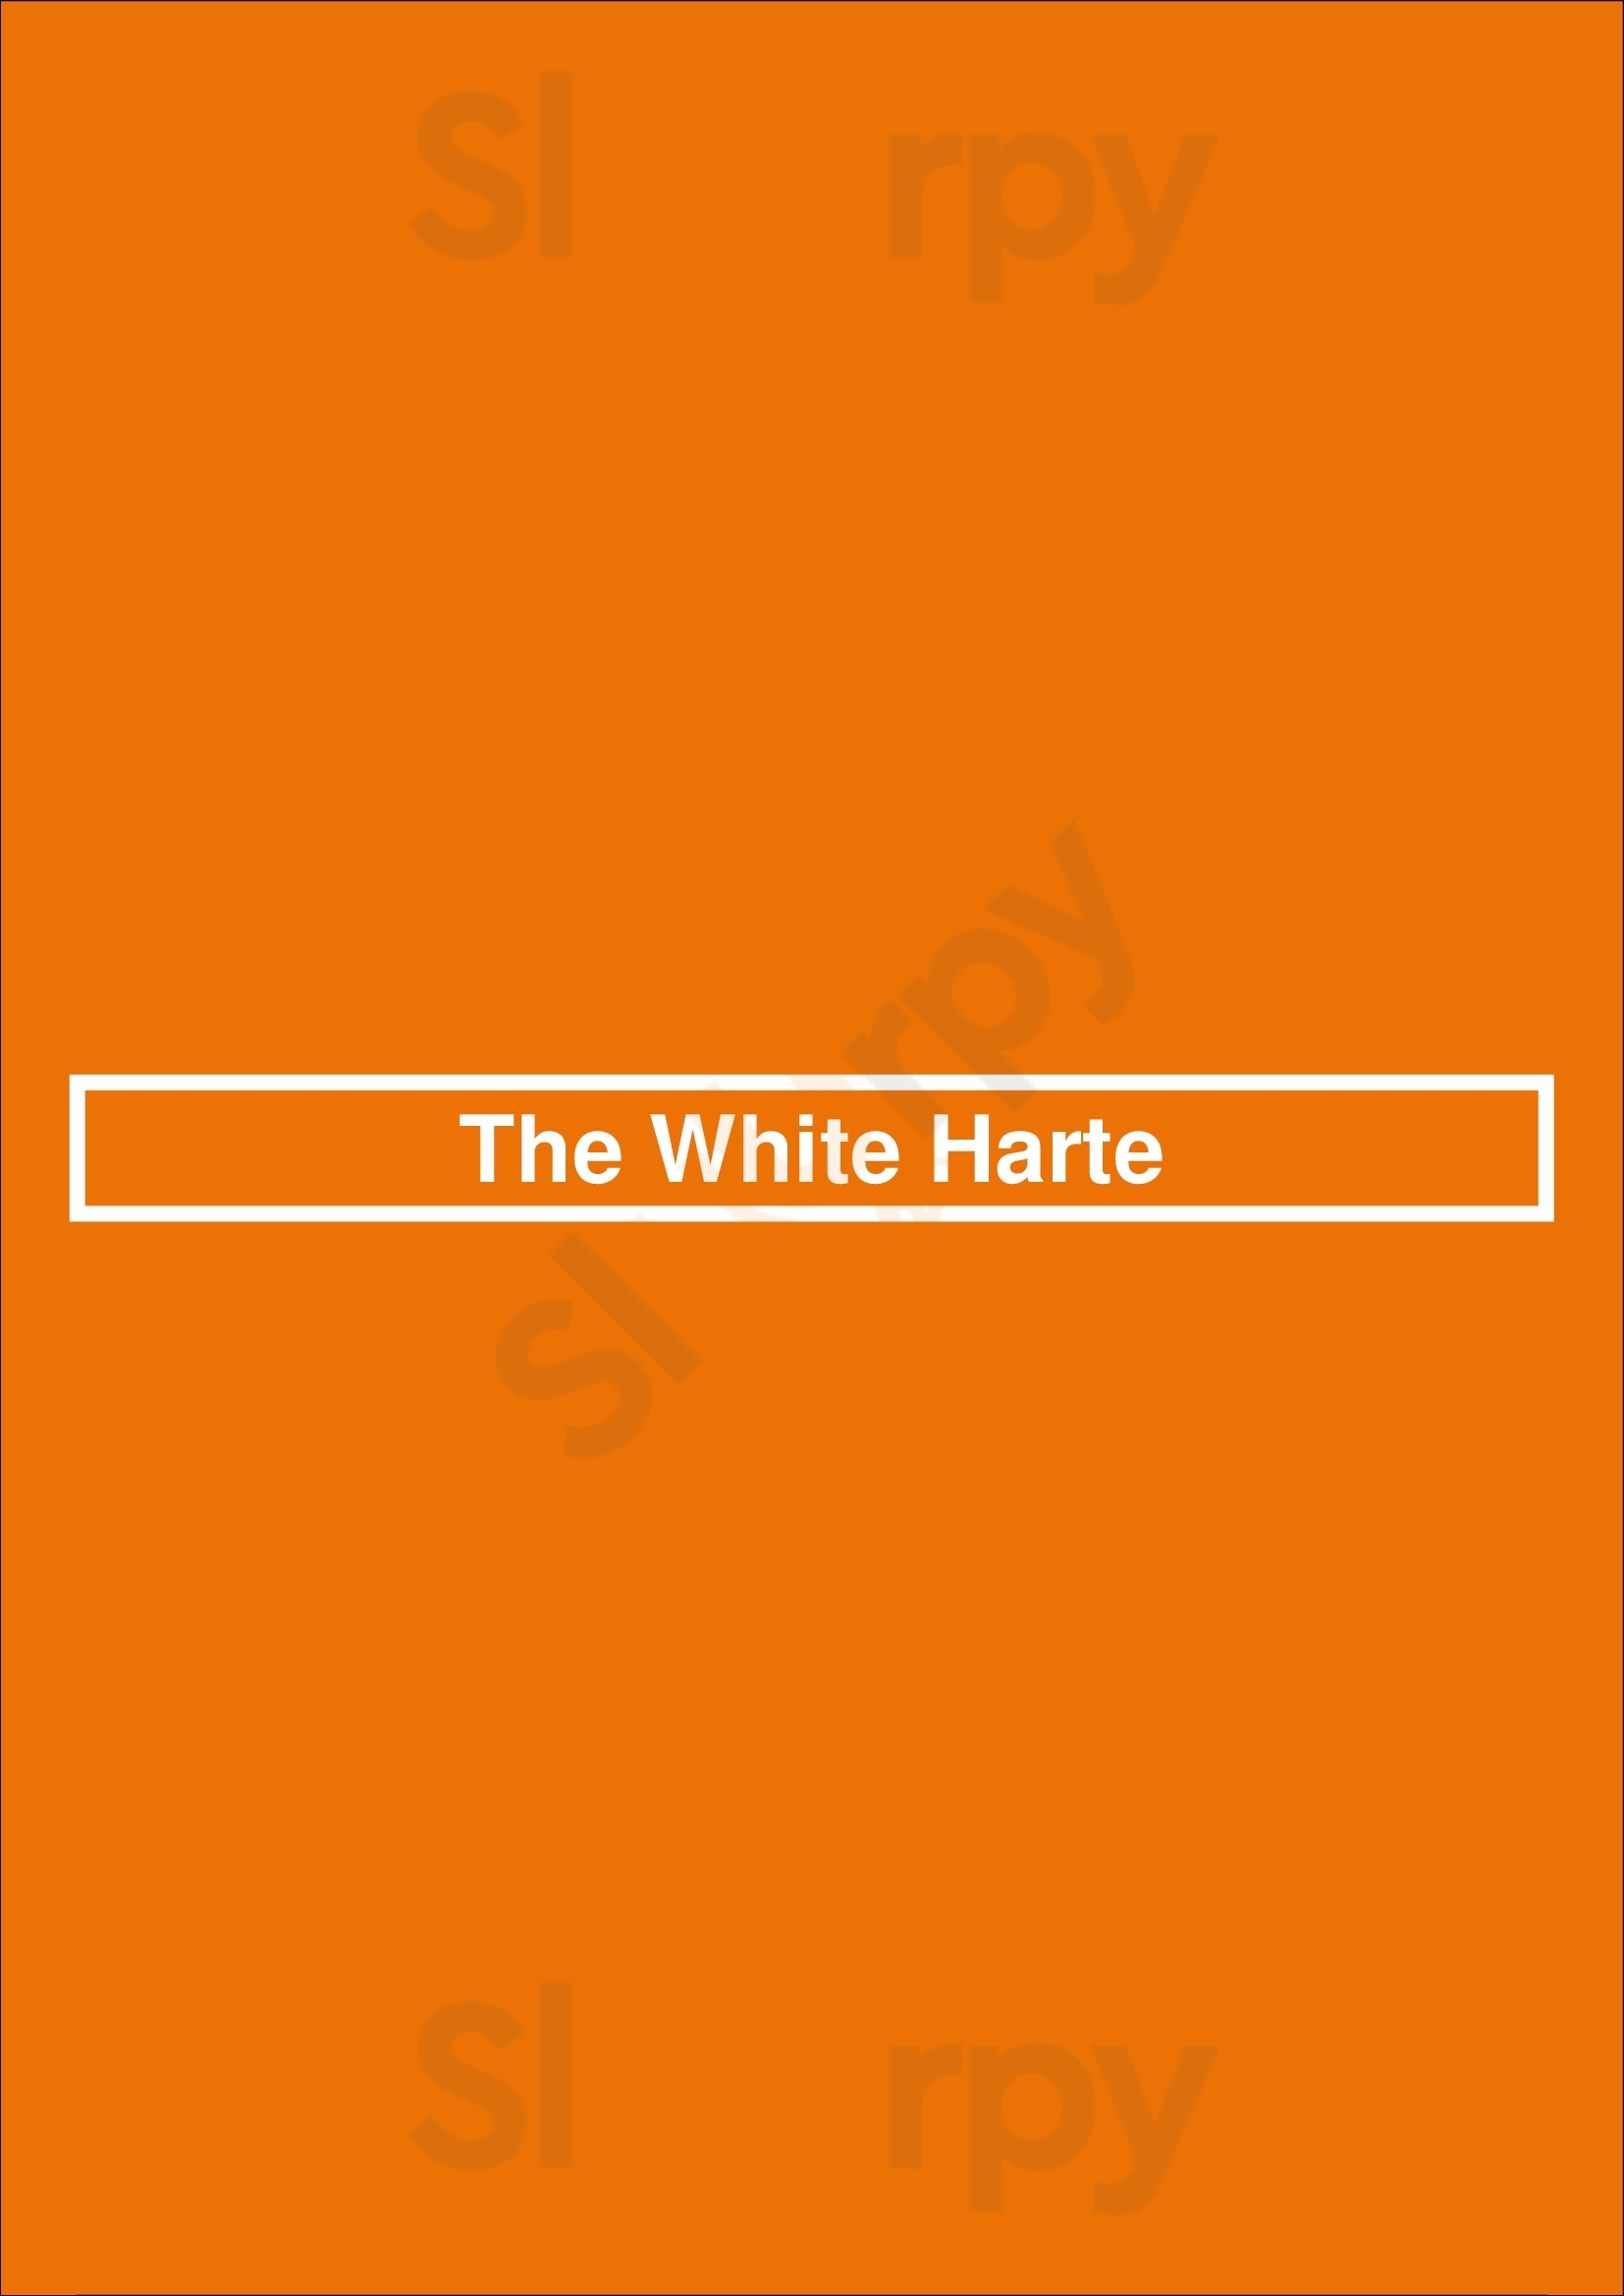 The White Harte Pub Los Angeles Menu - 1